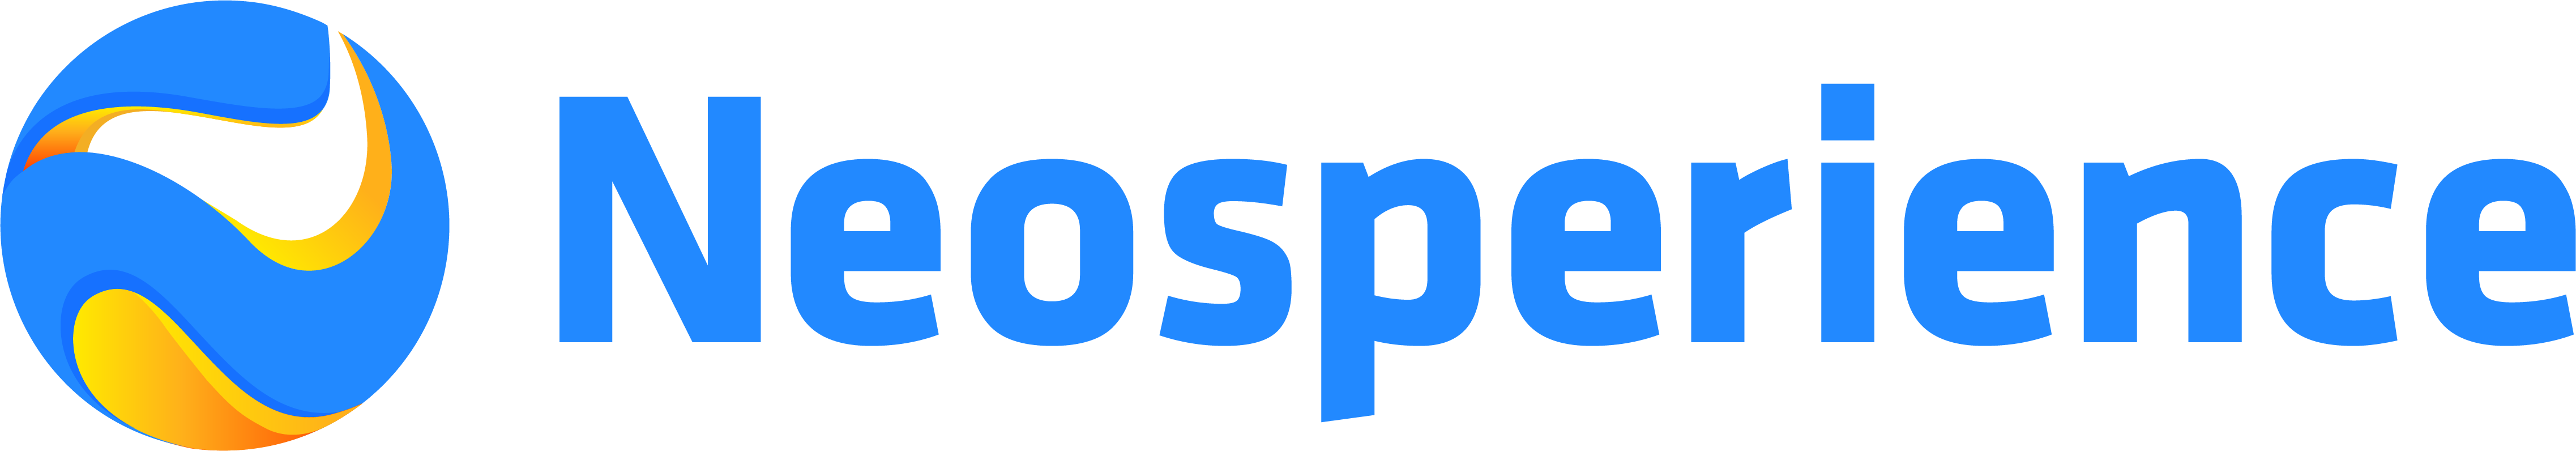 Logo neosperience